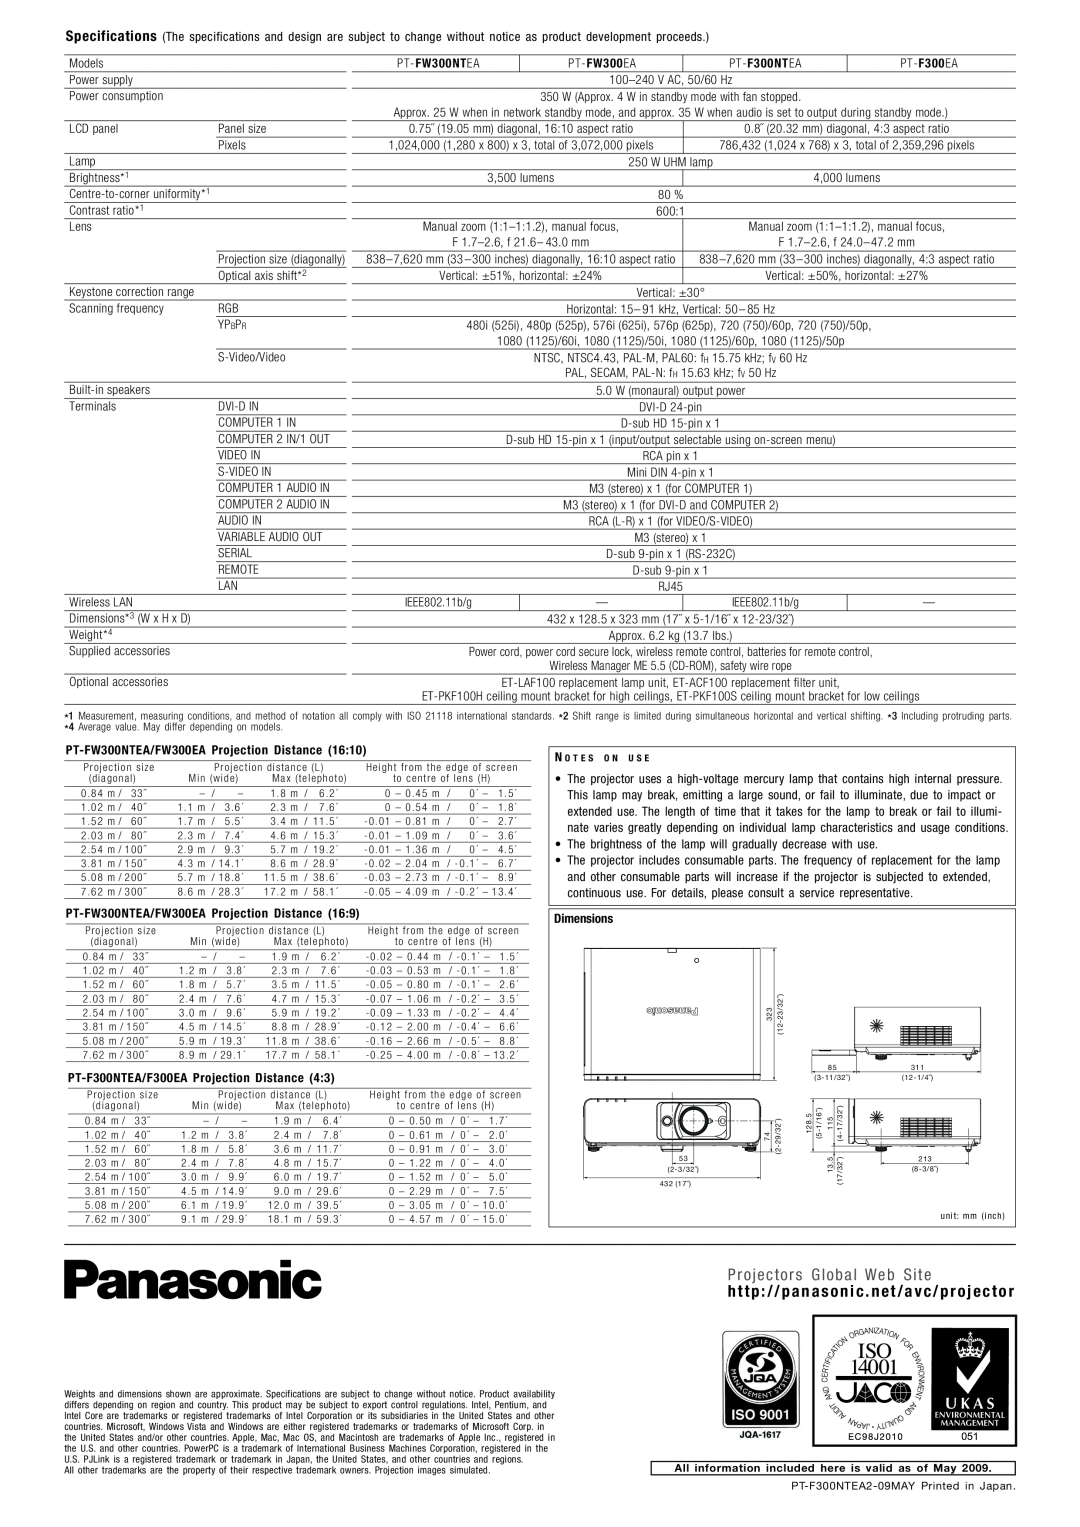 Panasonic PT-F100 Series Projectors Global Web Site, h t t p / / p a n a s o n i c . n e t / a v c / p r o j e c t o r 